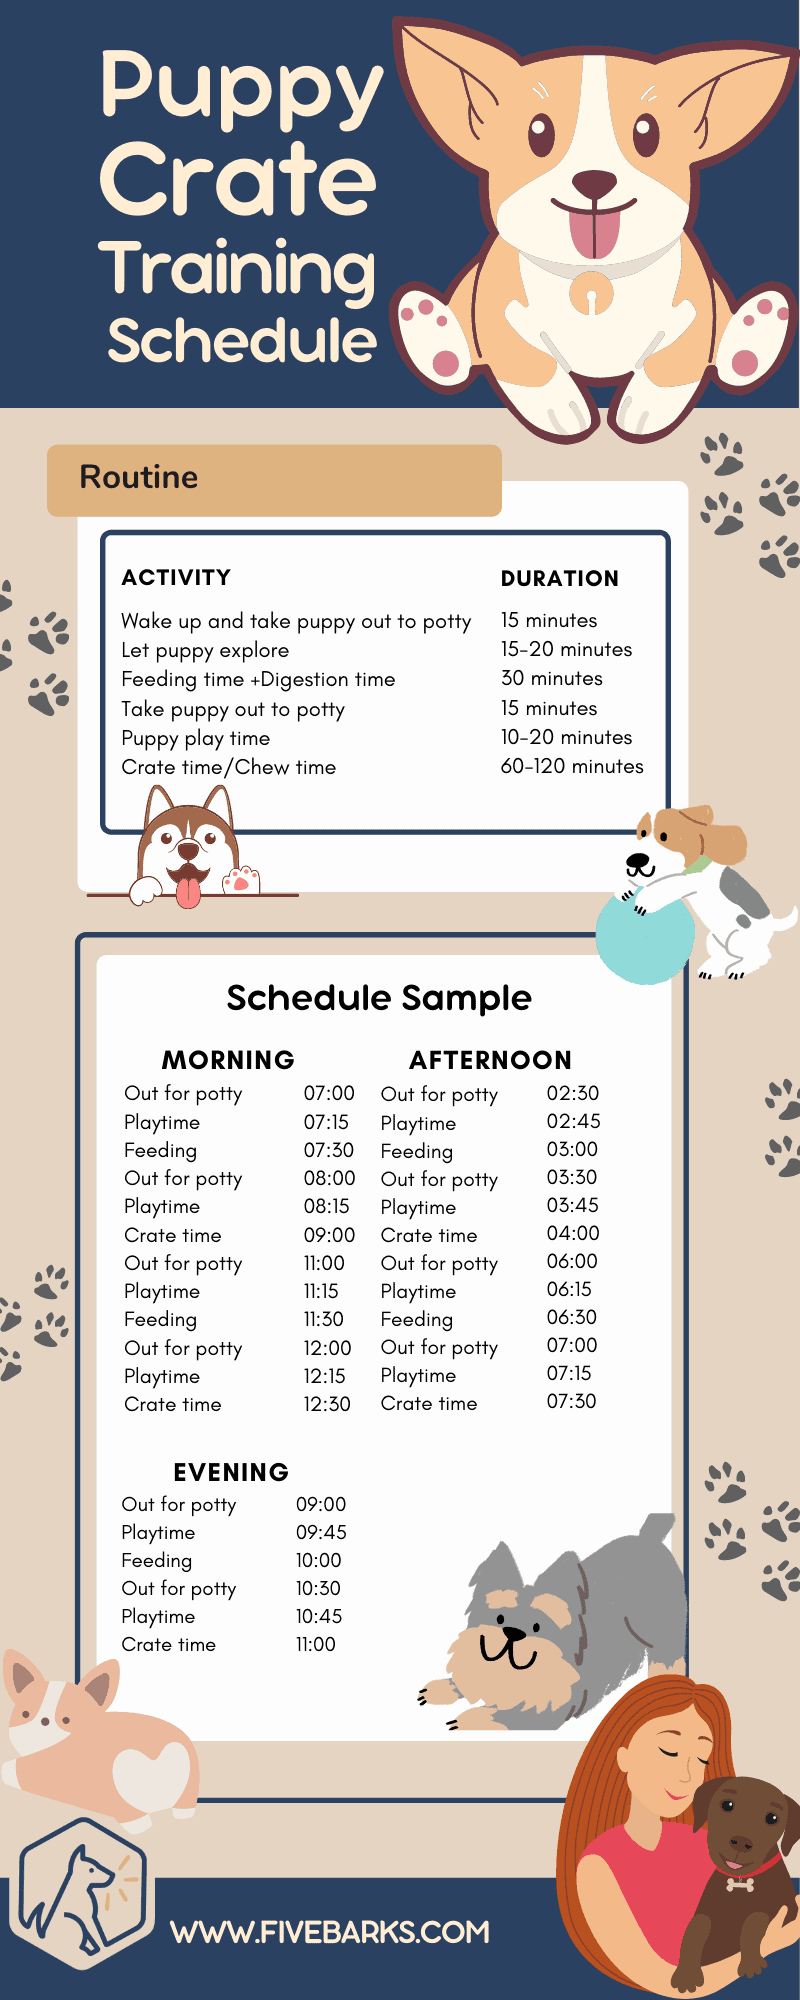 Puppy Crate Training Schedule